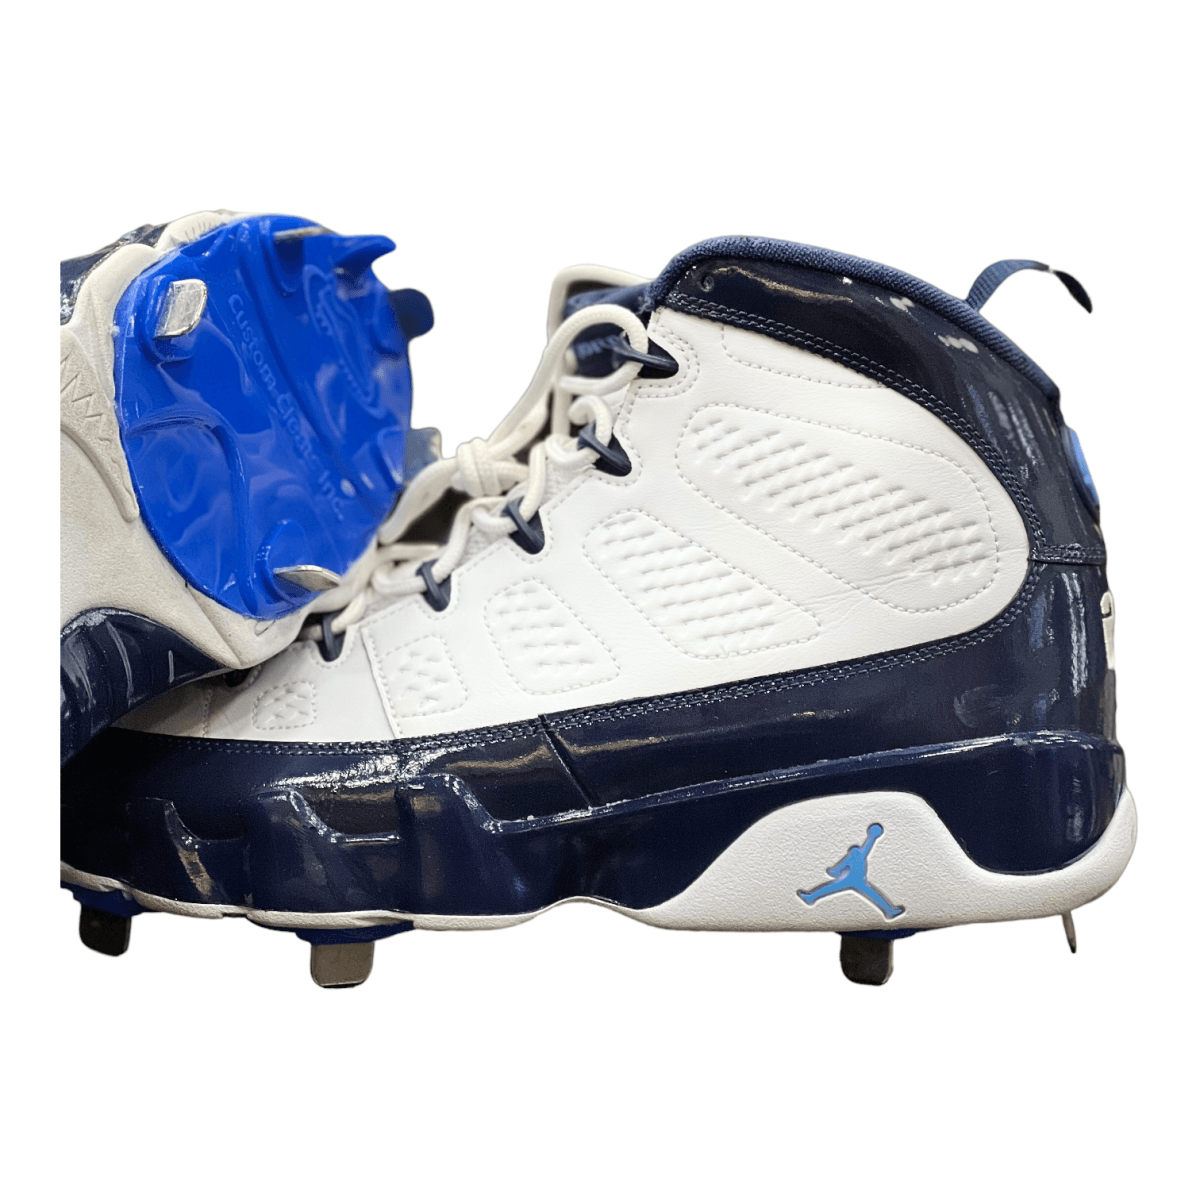 Jordan 9 Retro 'UNC' Custom Baseball or Football Cleat - High Sneaker - Jawns on Fire Sneakers & Streetwear